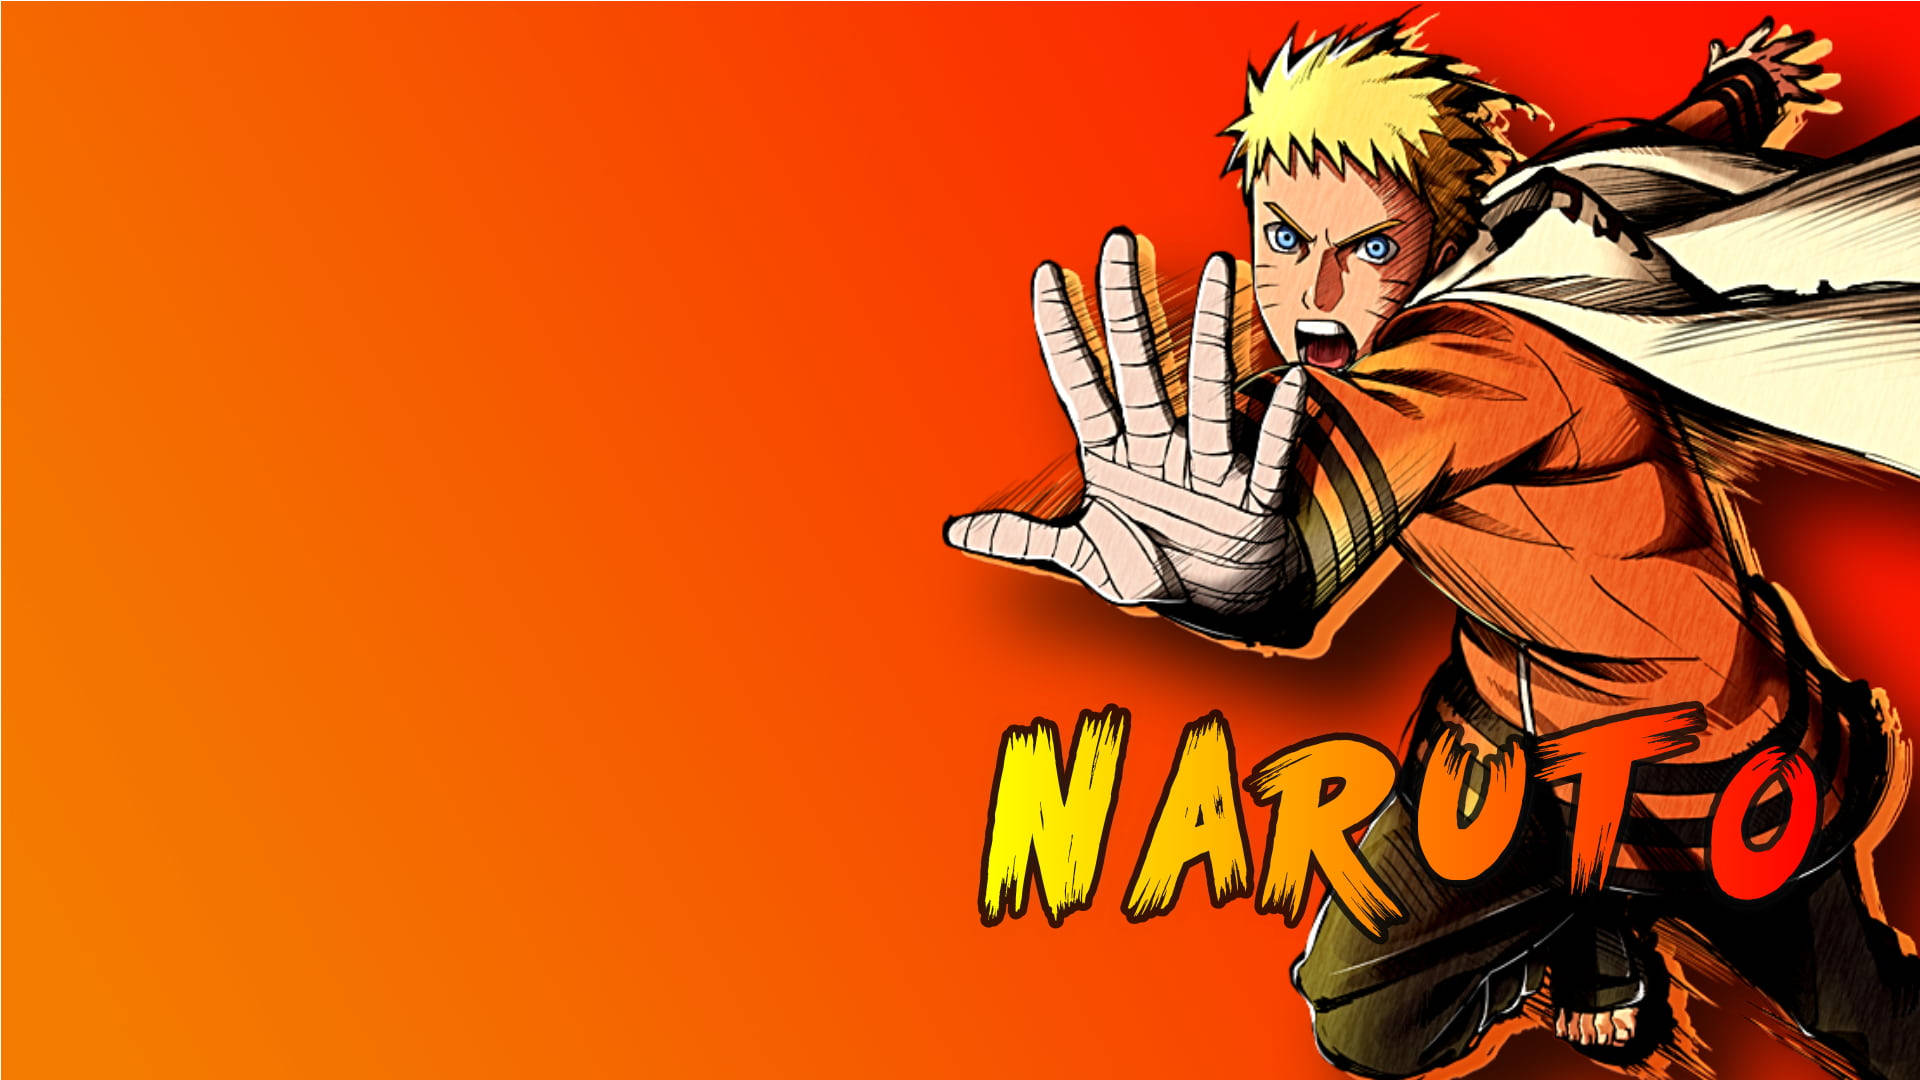 Moving Naruto Technique Background